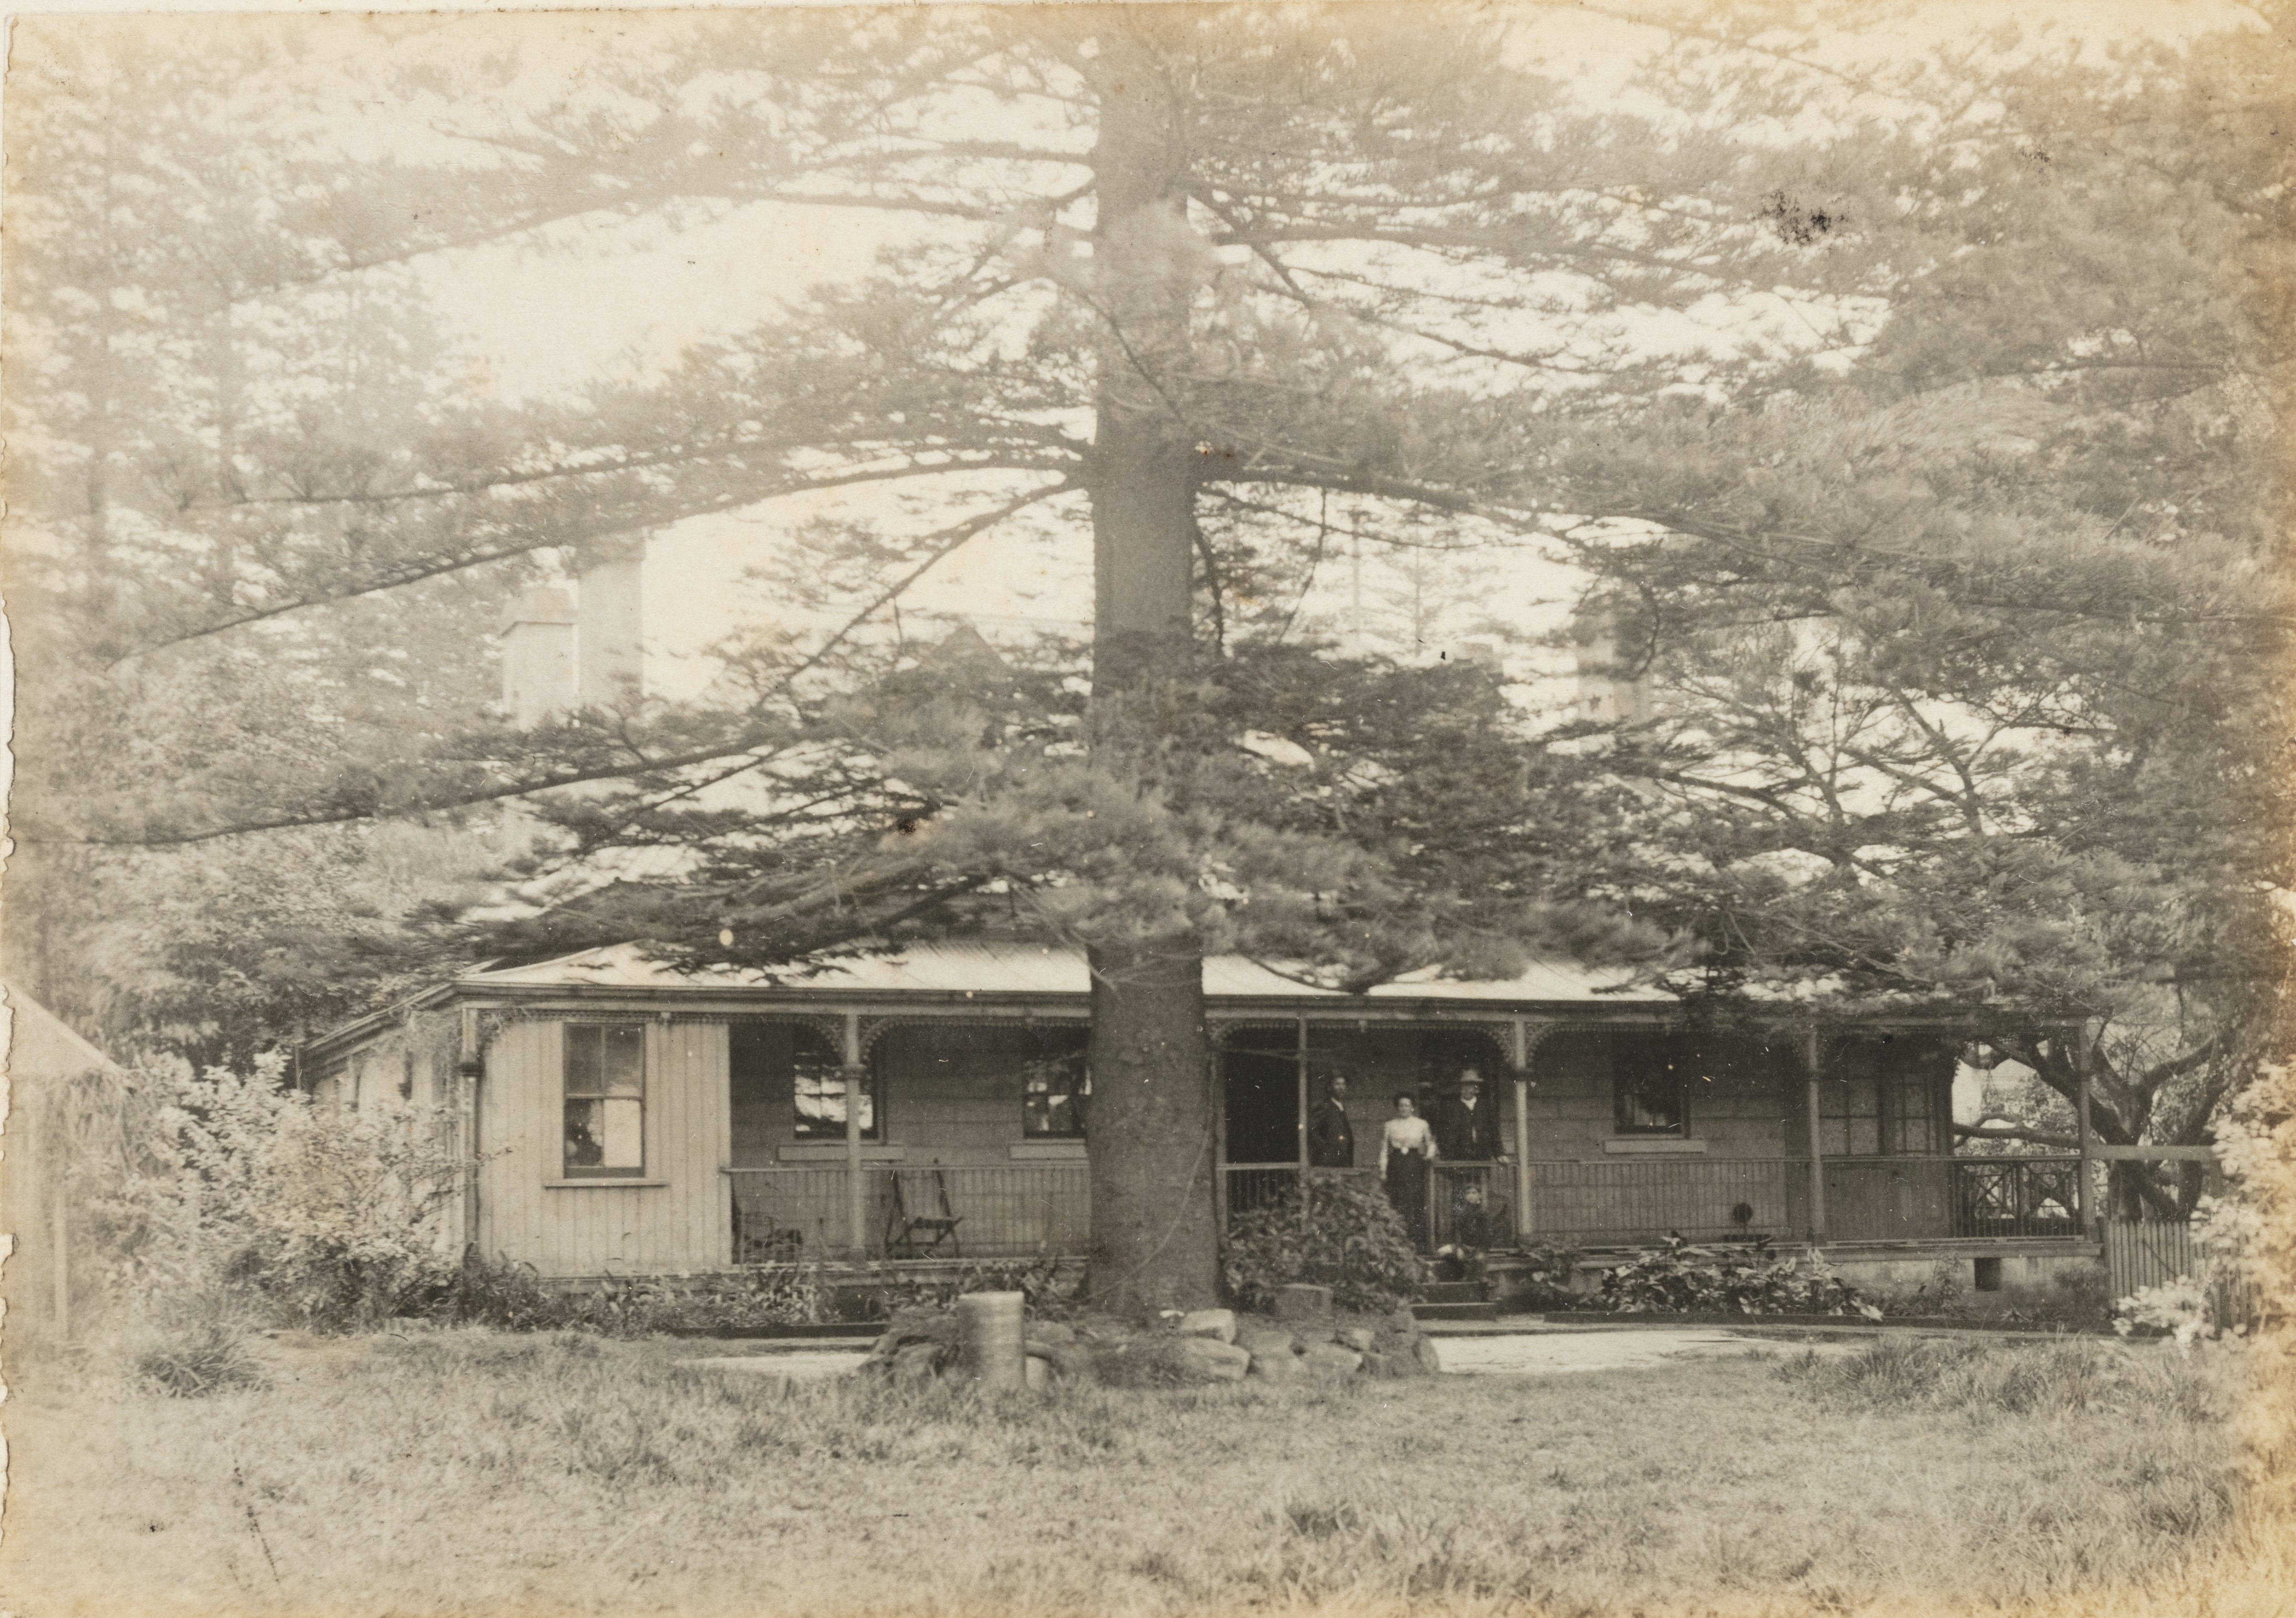 Photograph of Barcom Glen cottage